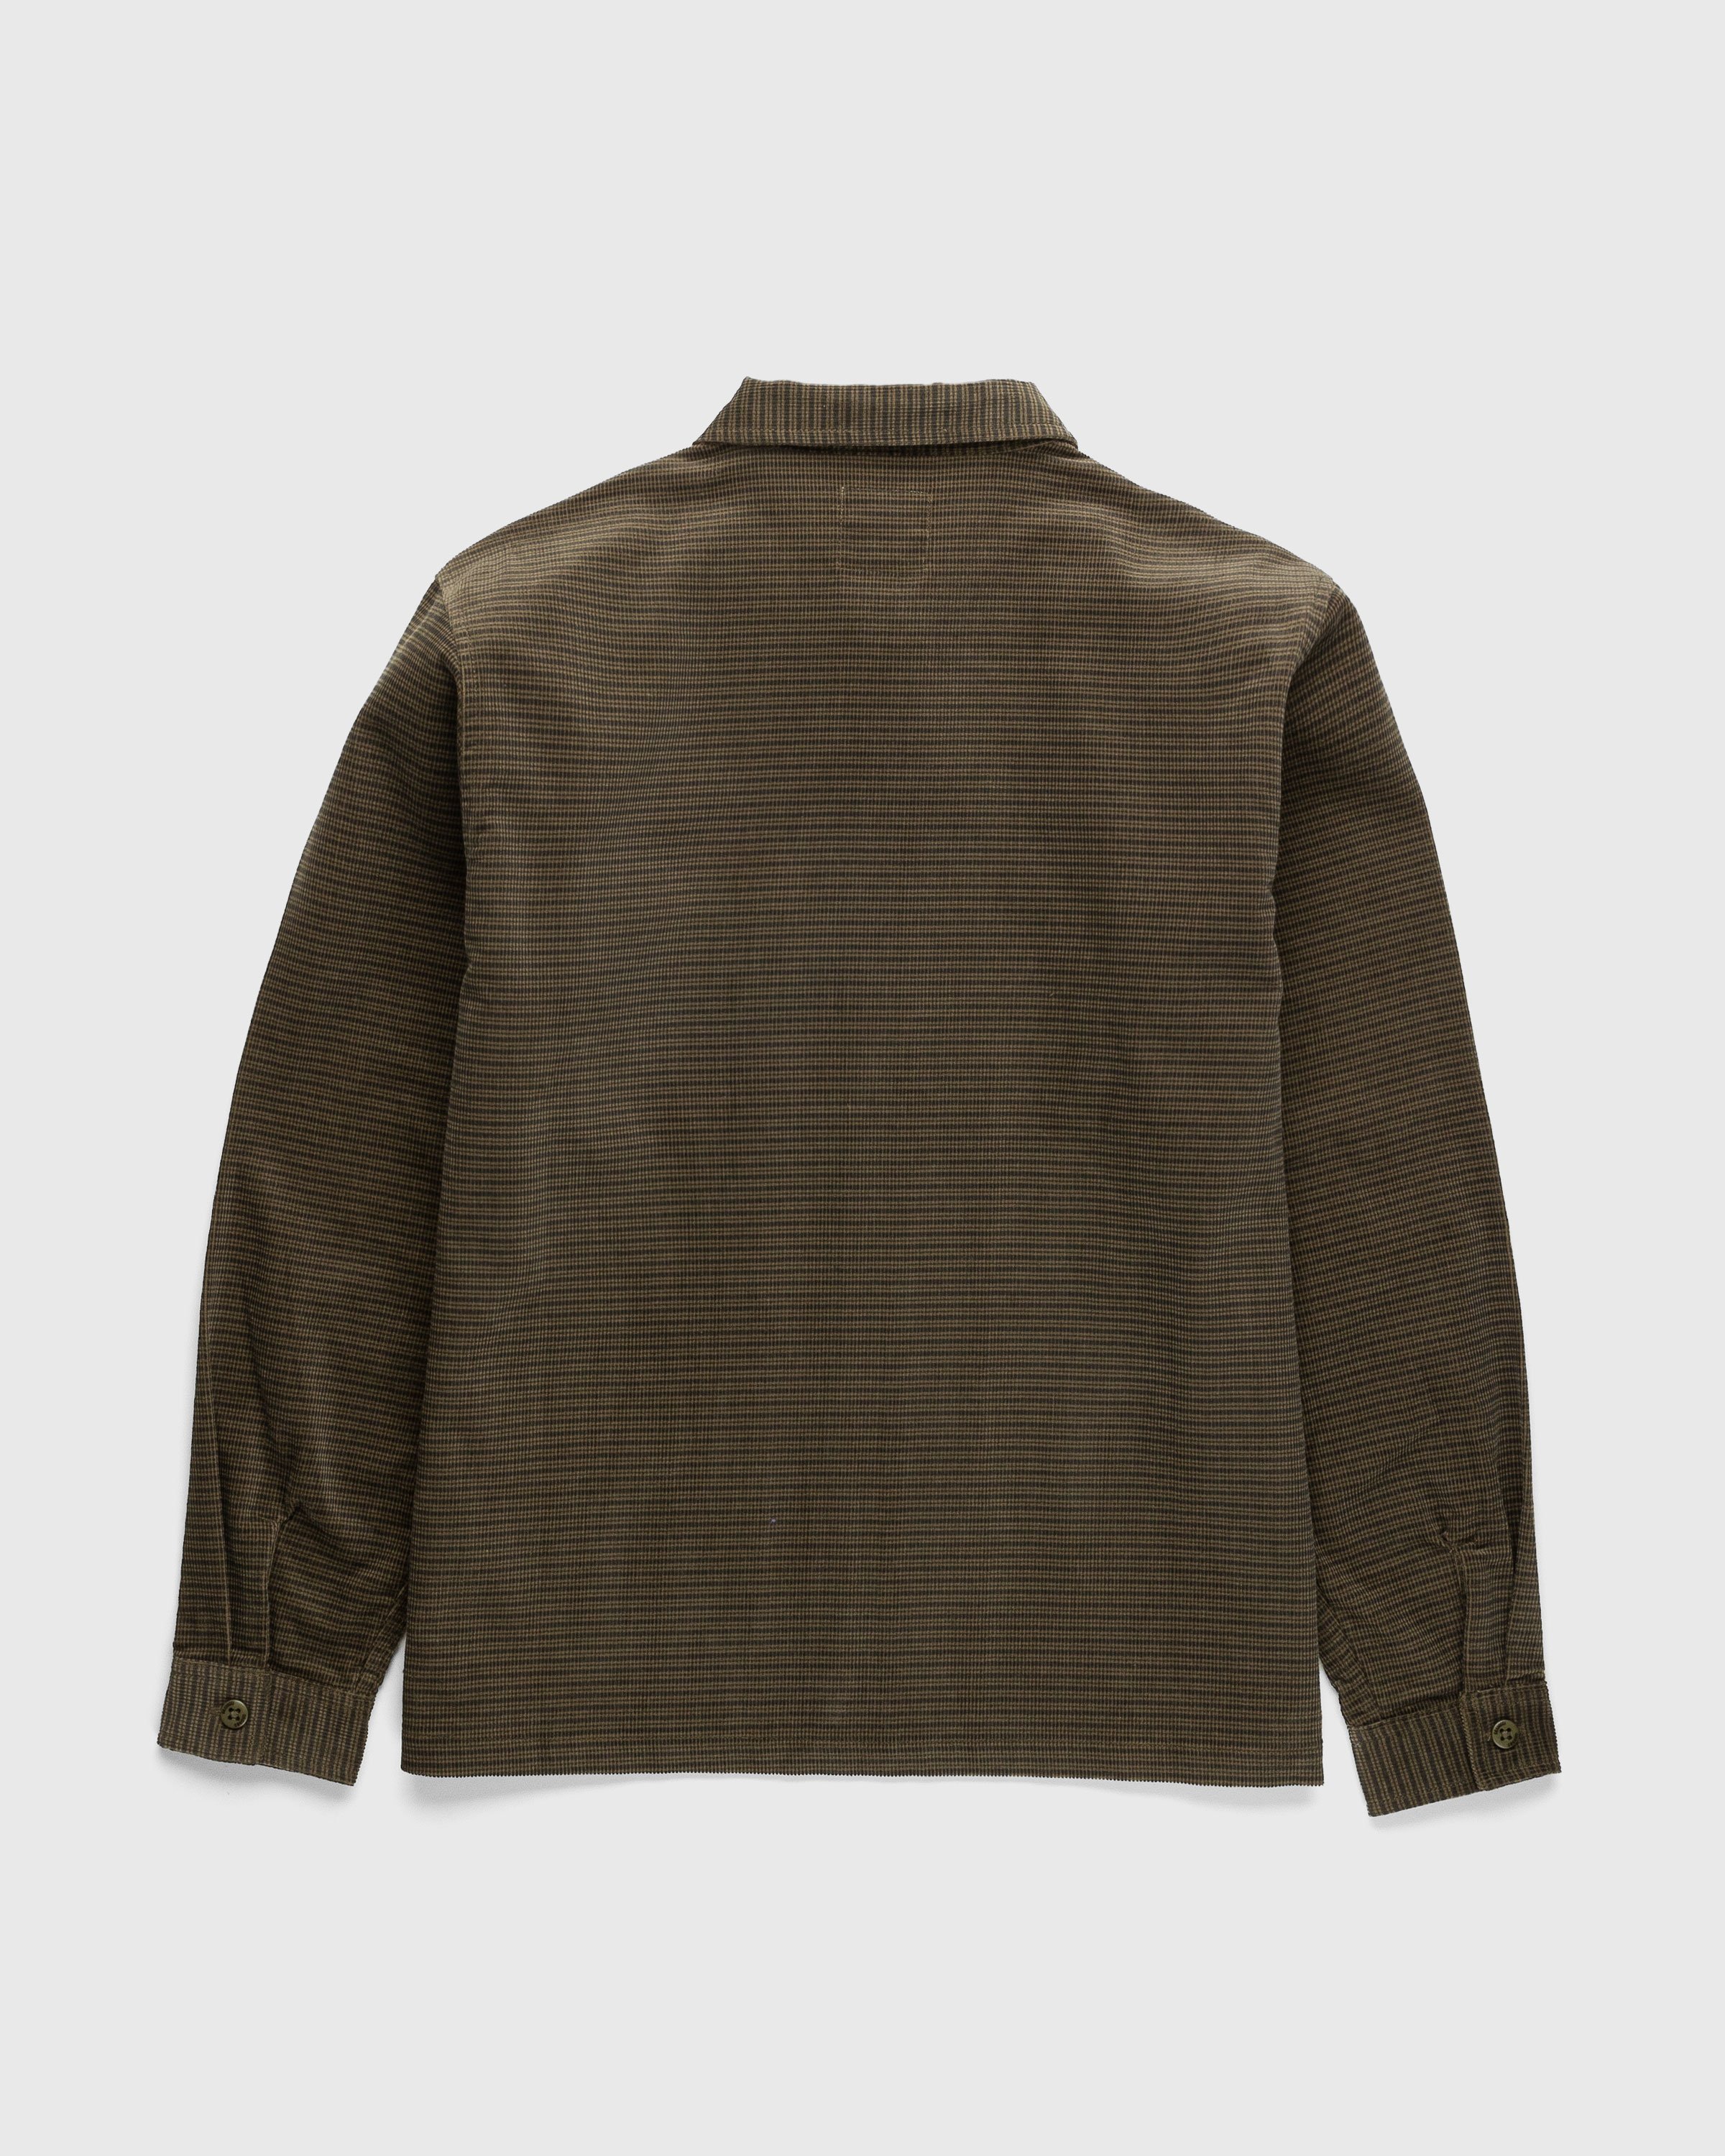 Gramicci - Grid Cord Zip Shirt Olive - Clothing - Green - Image 2